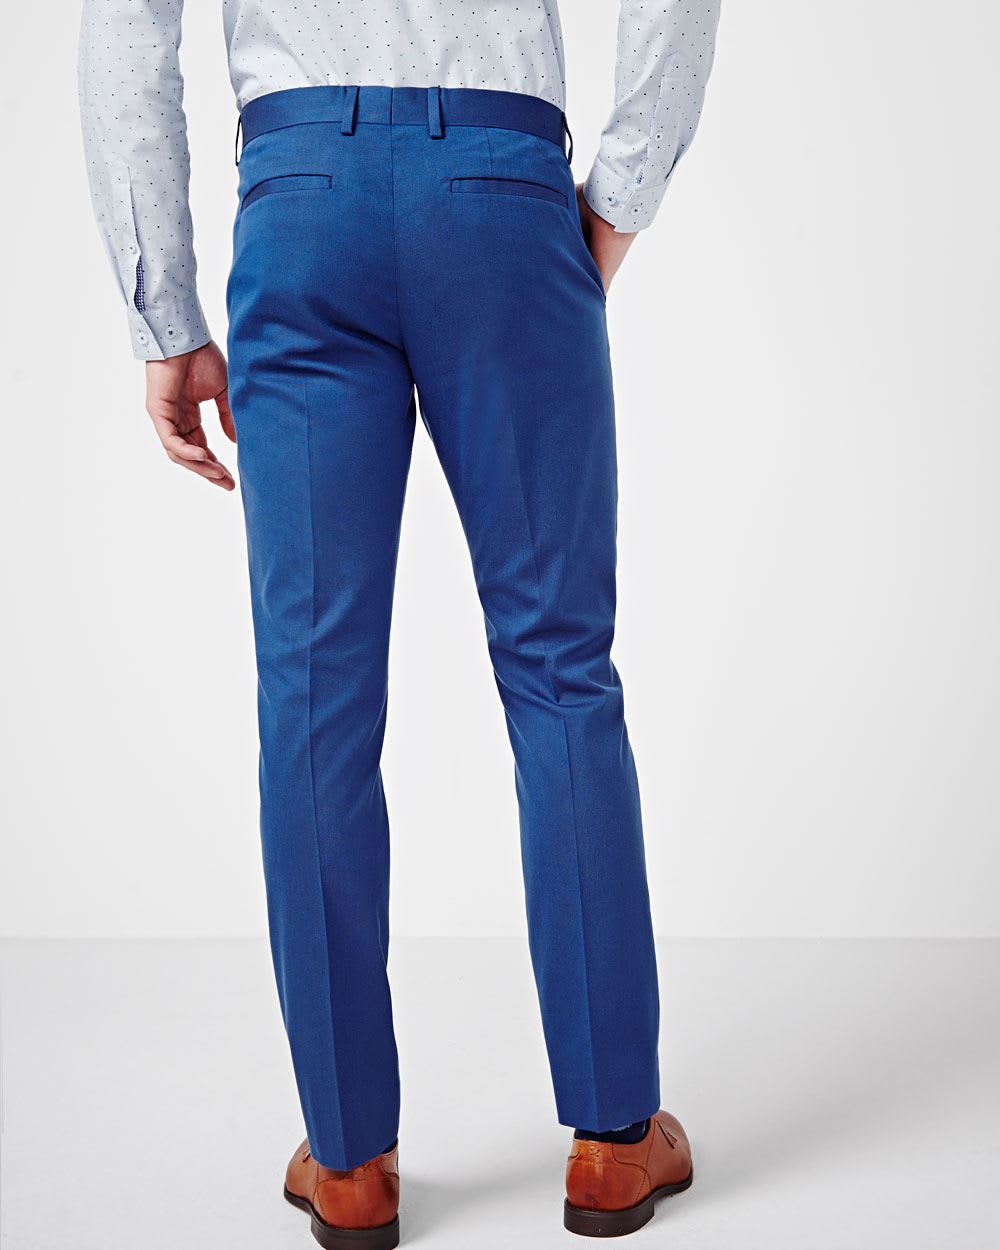 Slim Fit Bright Blue Pant - Regular | RW&CO.